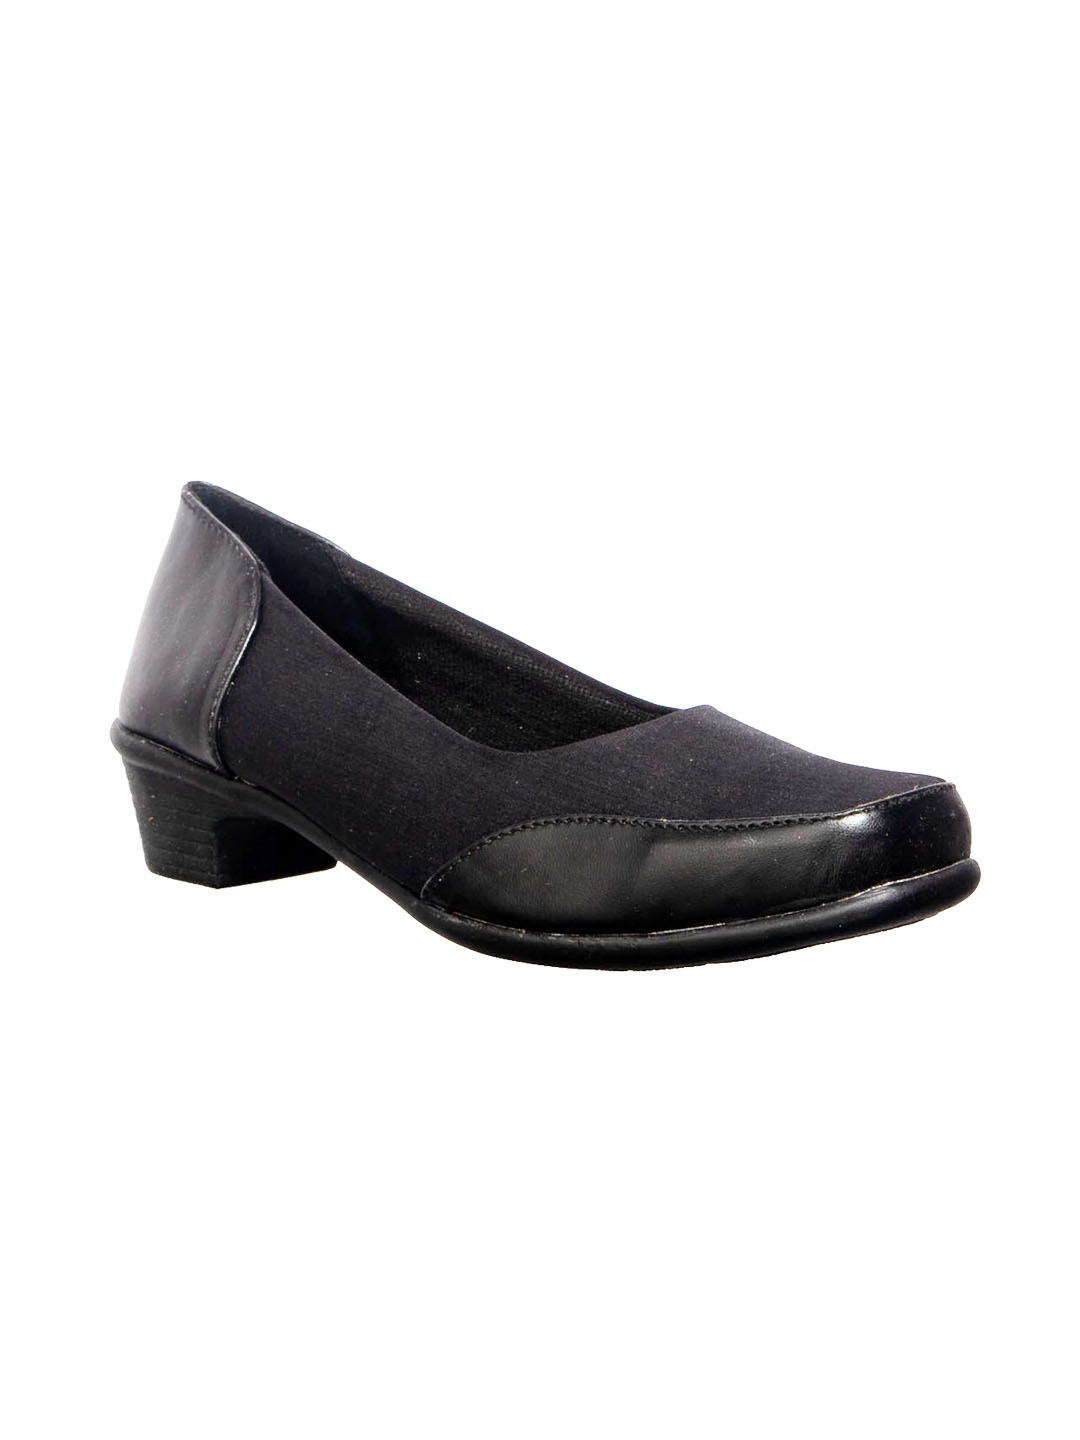 Buy Grey Heeled Sandals for Women by KHADIMS Online | Ajio.com